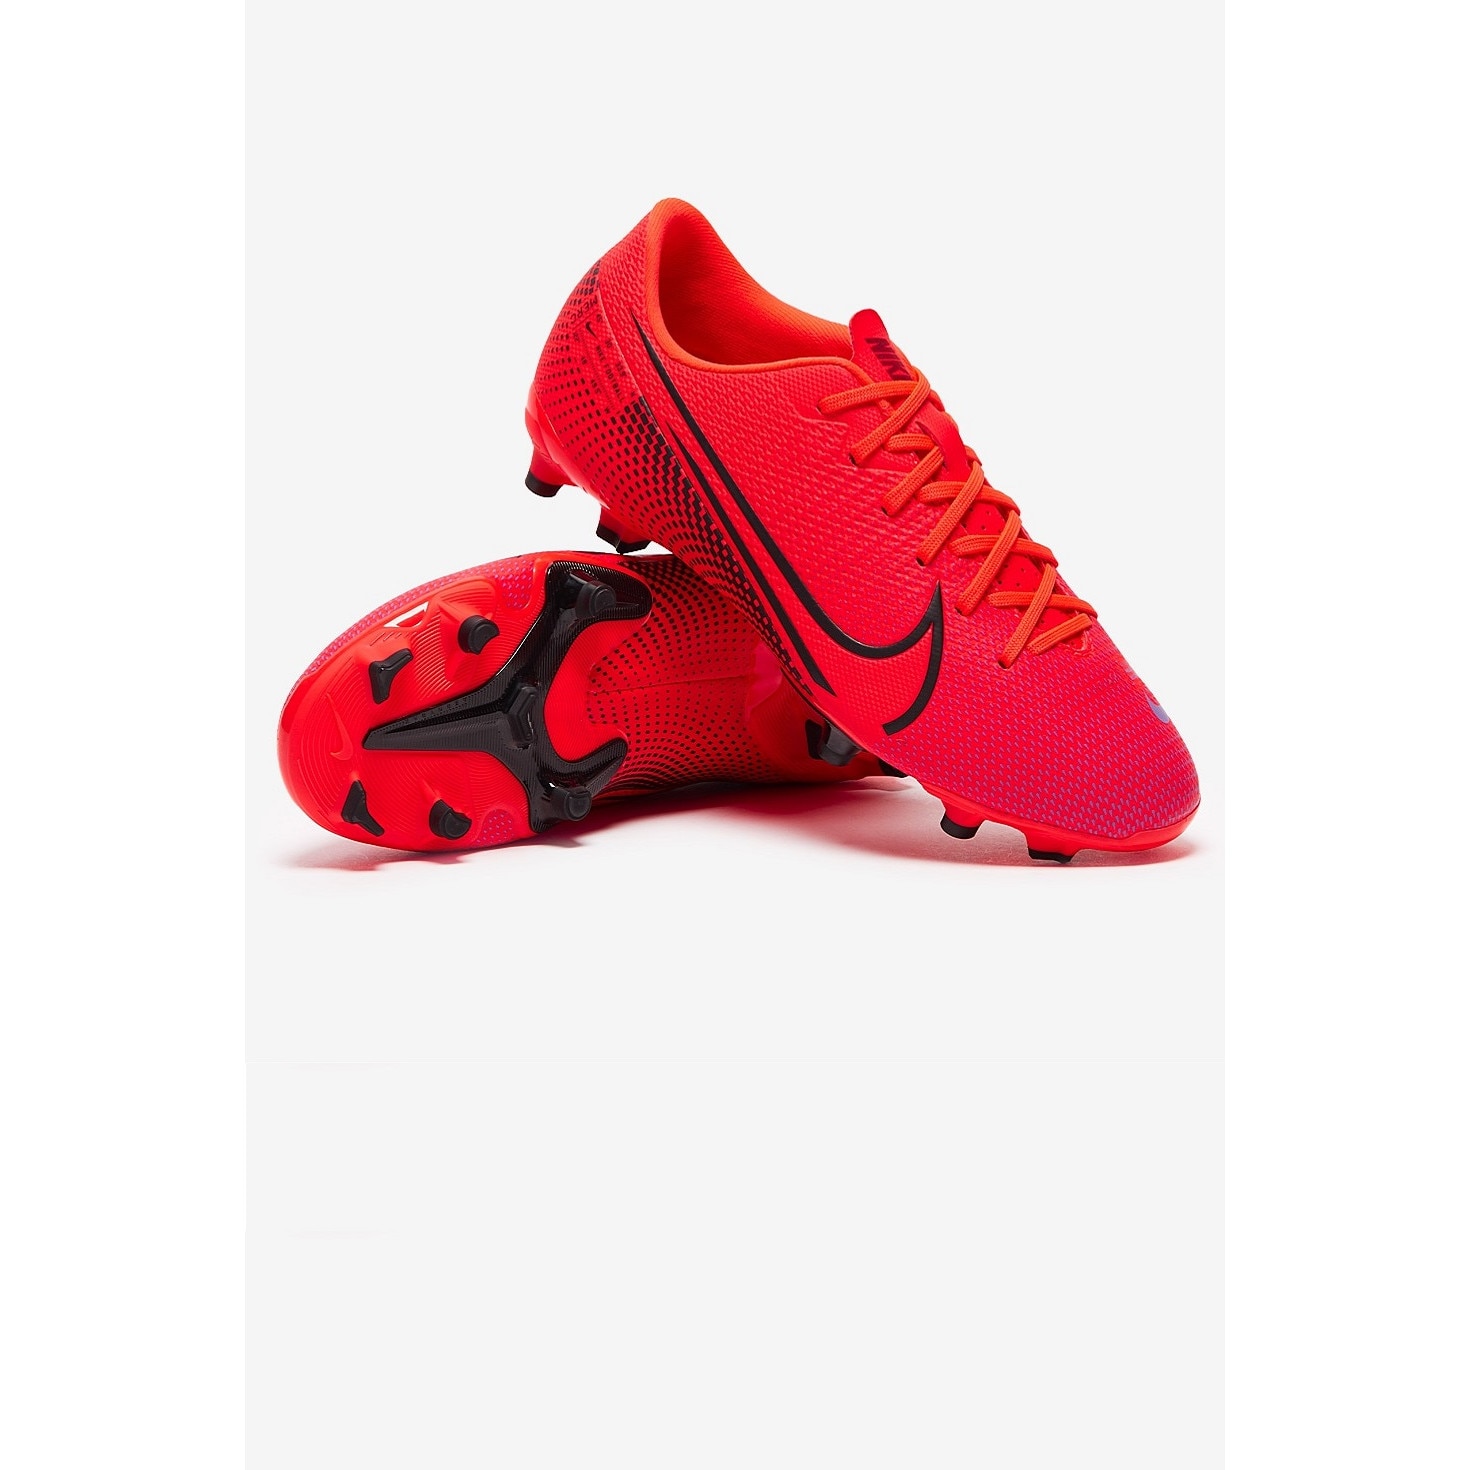 Ghete fotbal copii Nike Mercurial Vapor 13 FG/MG, rosu/roz, - eMAG.ro